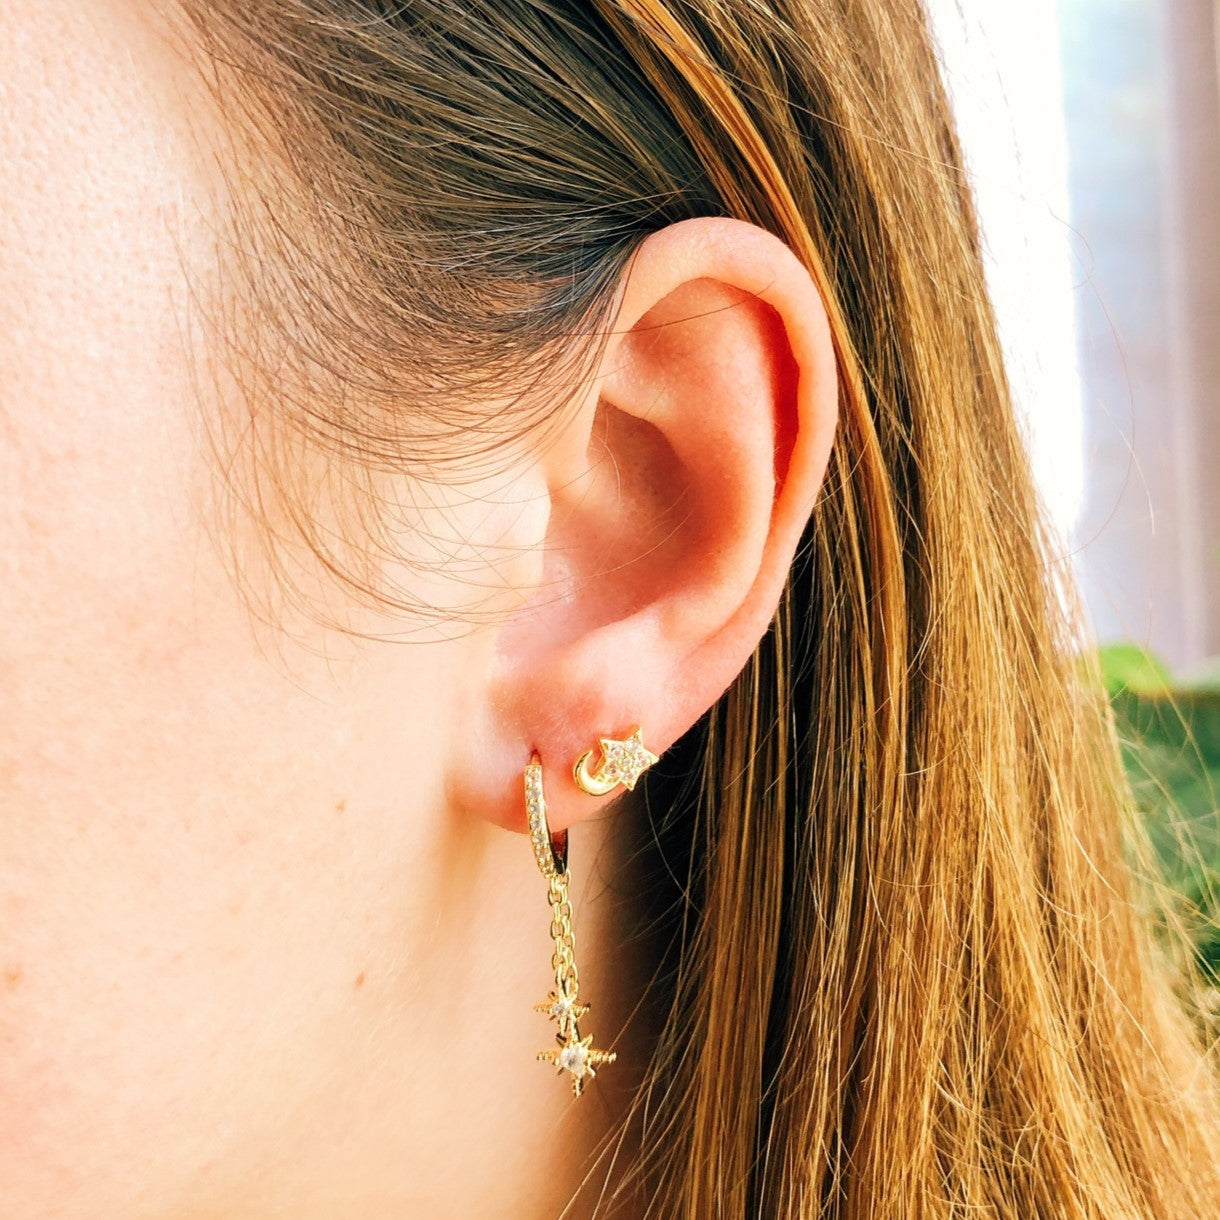 Hanging star earrings